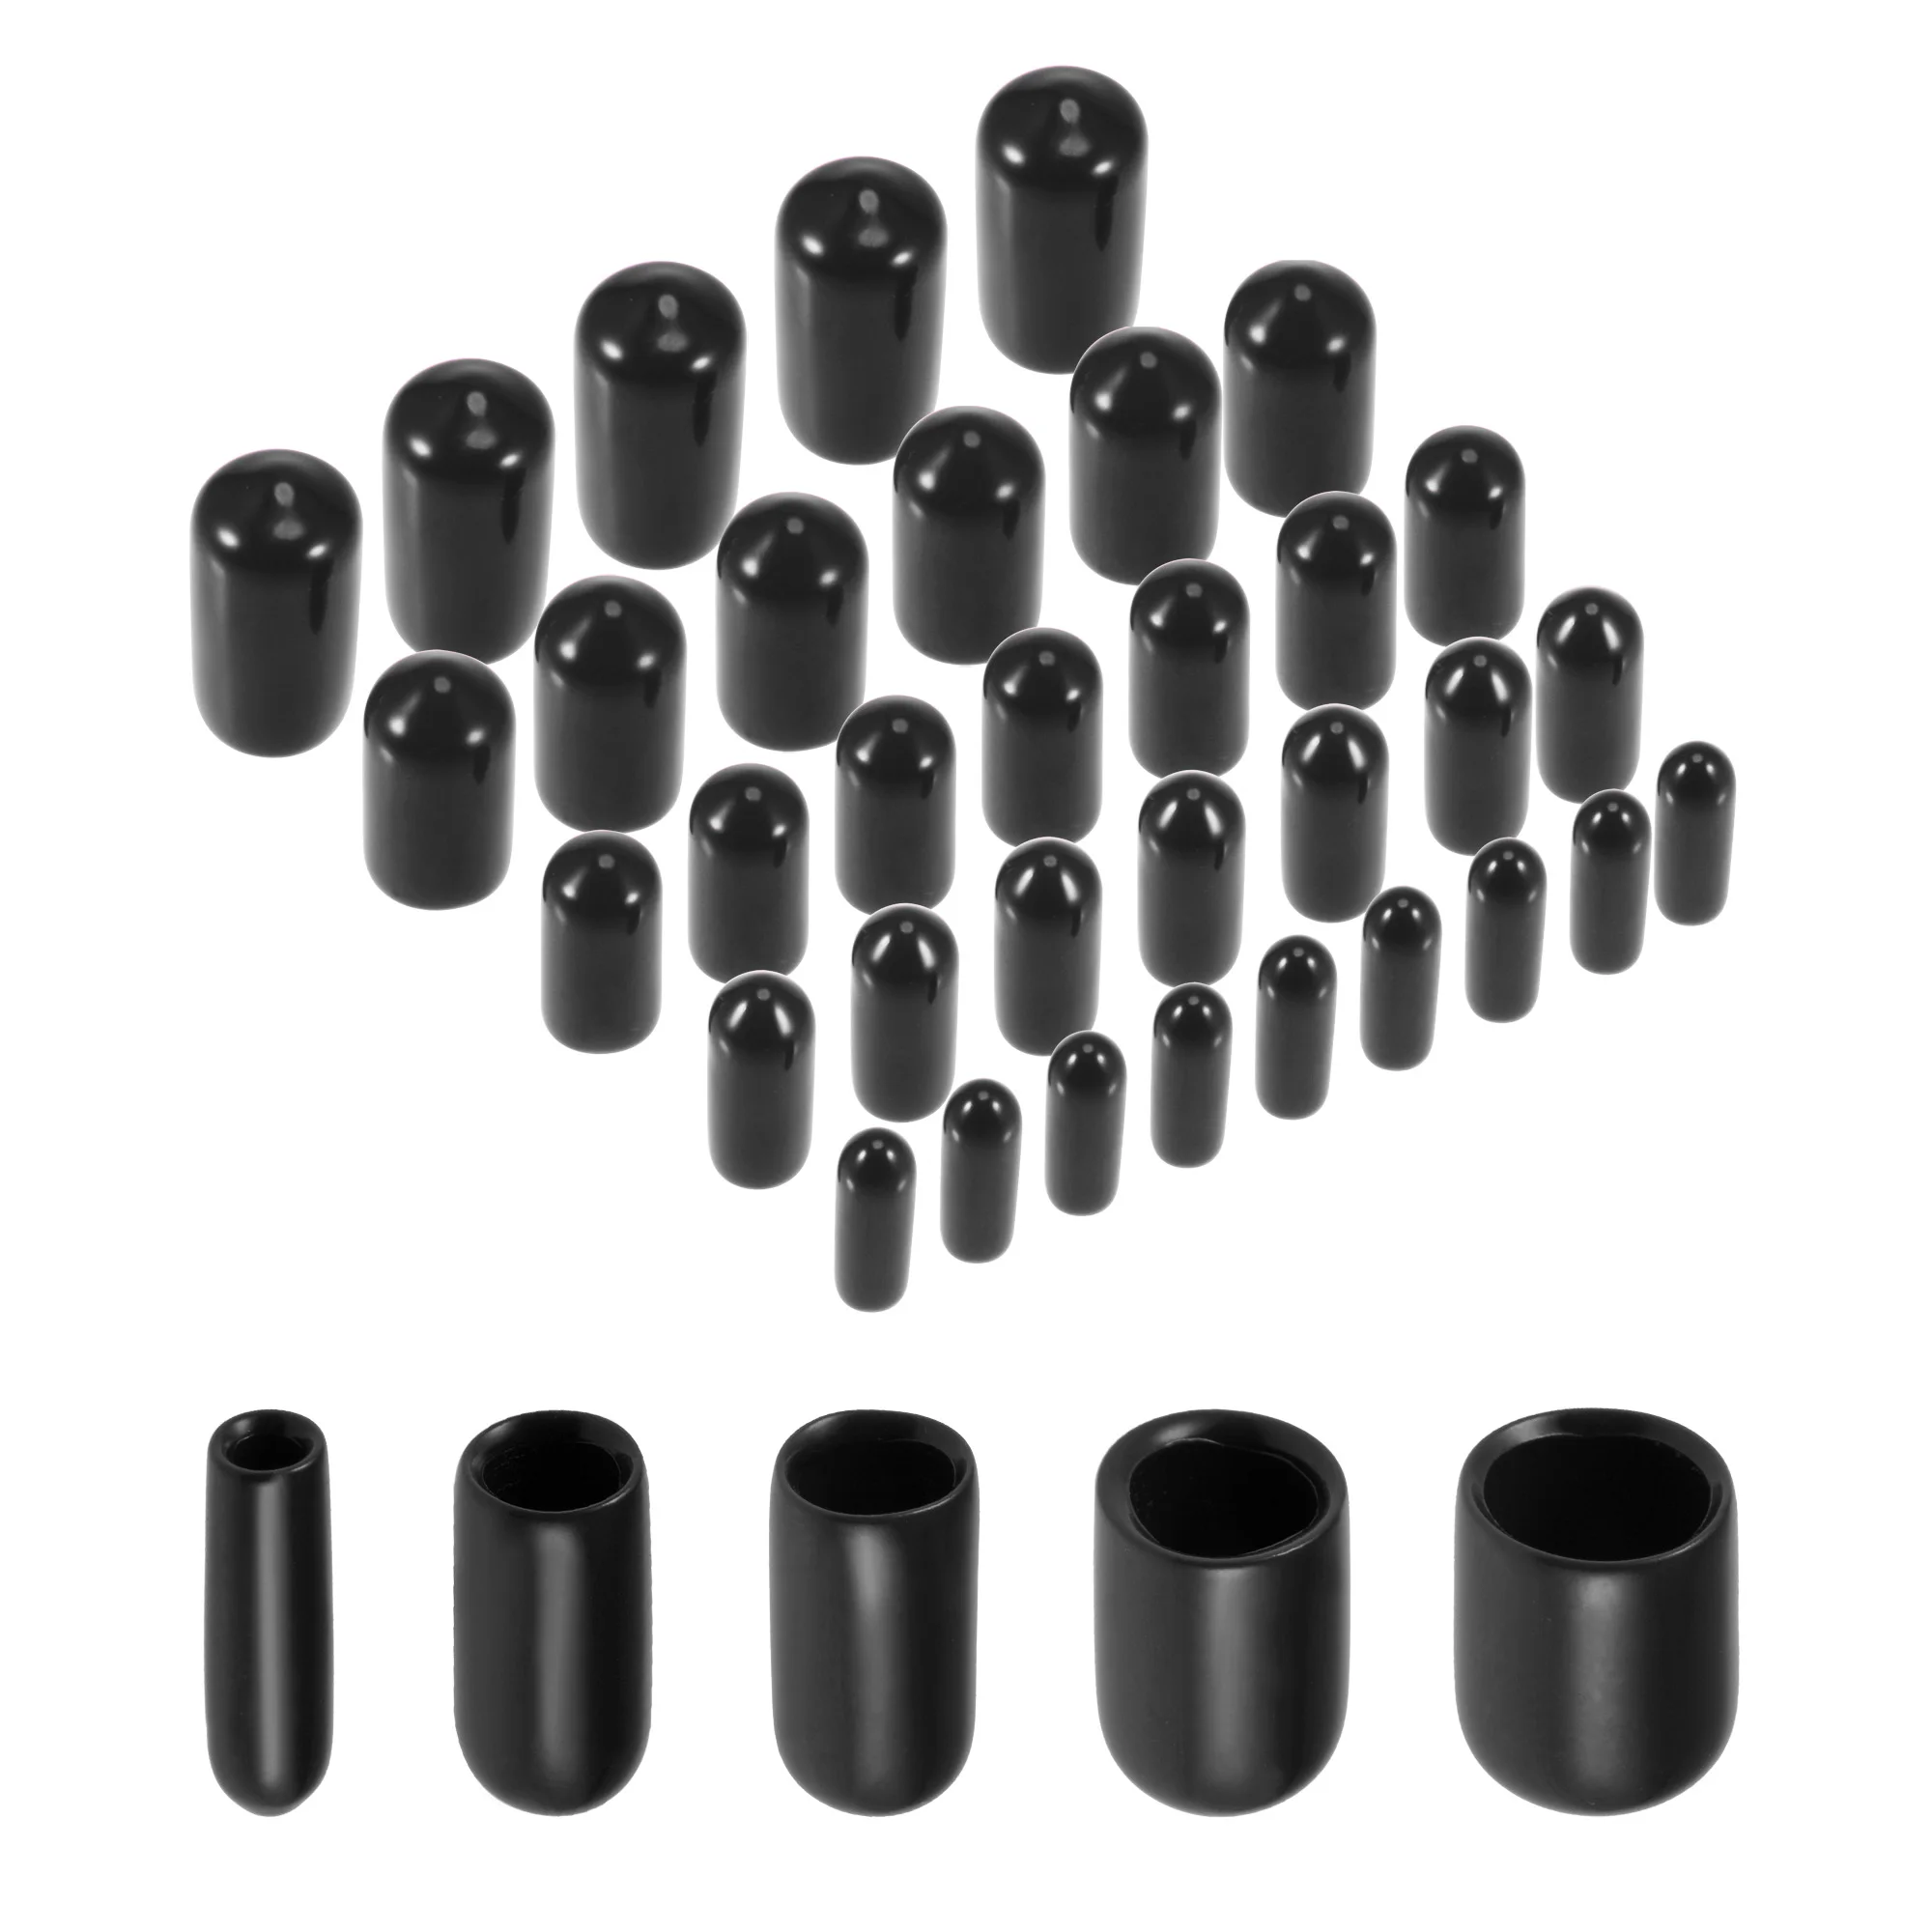 

Uxcell 100pcs Rubber End Caps 1/8" 3/16" 1/4" 5/16" 3/8" Black Vinyl Cover Screw Thread Protectors Assortment Kit Plastic Sleeve